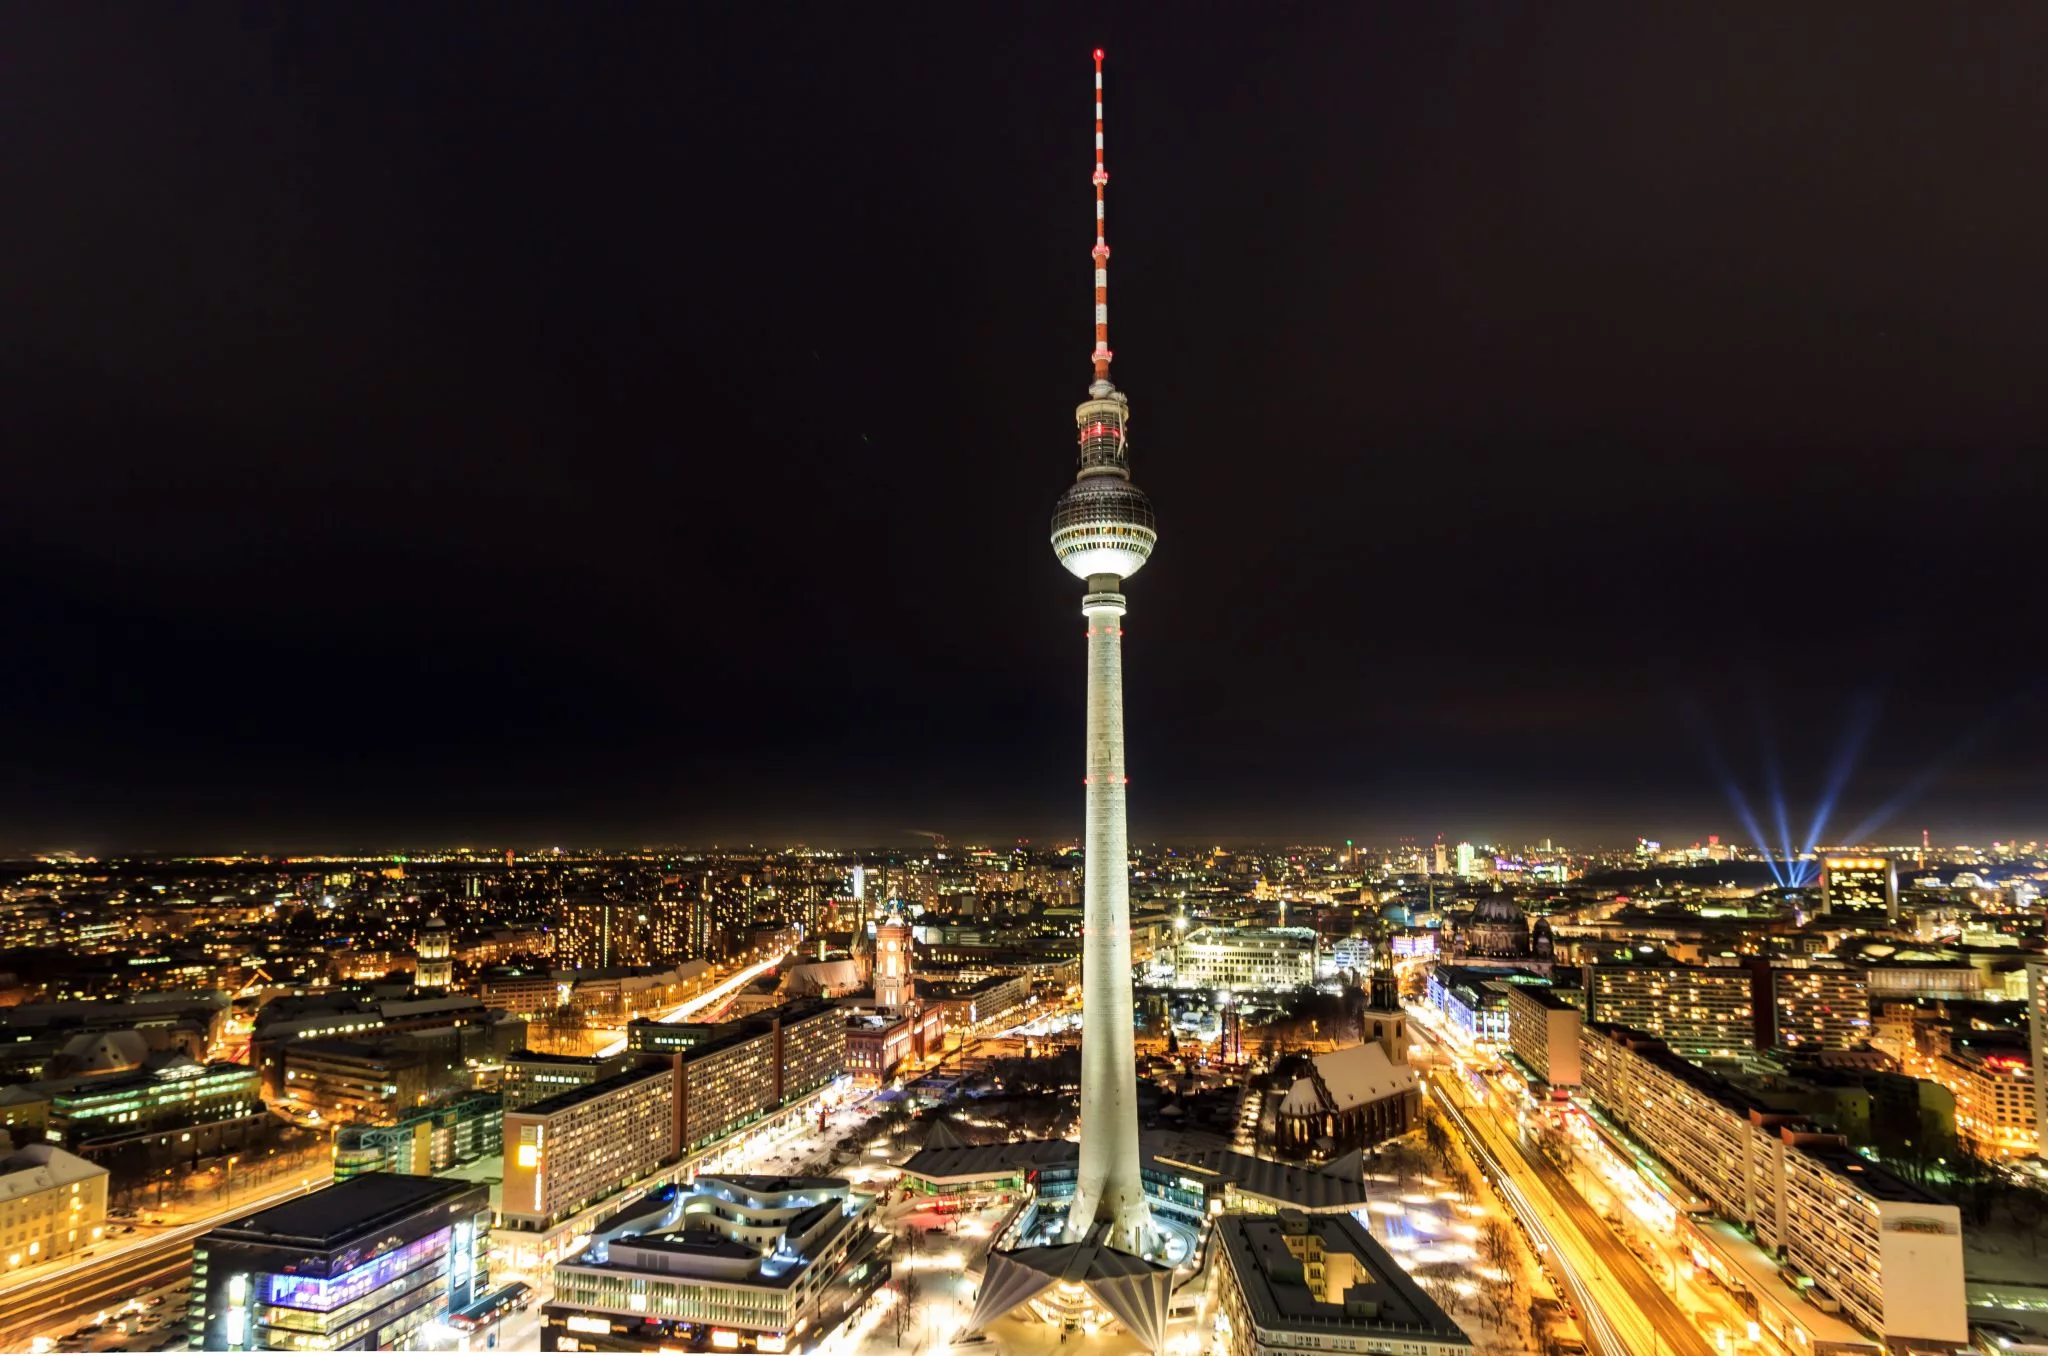 Berlin Skyline, Germany